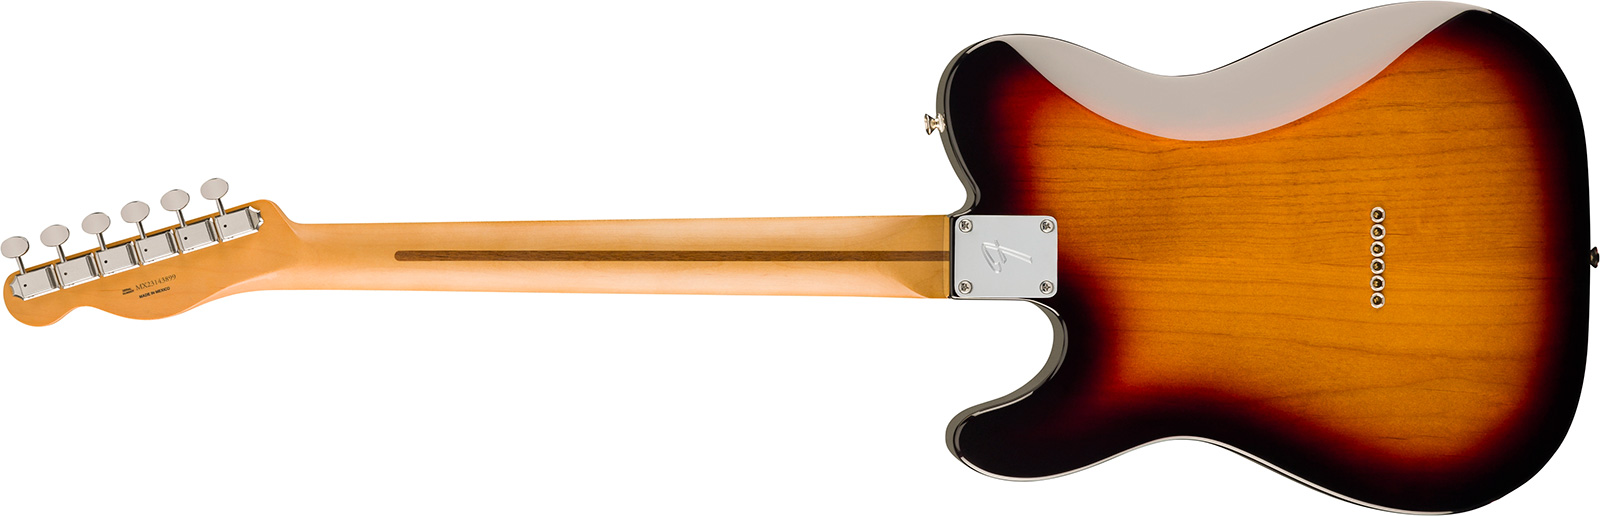 Fender Tele Player Ii Hh Mex 2h Ht Rw - 3-color Sunburst - Televorm elektrische gitaar - Variation 1